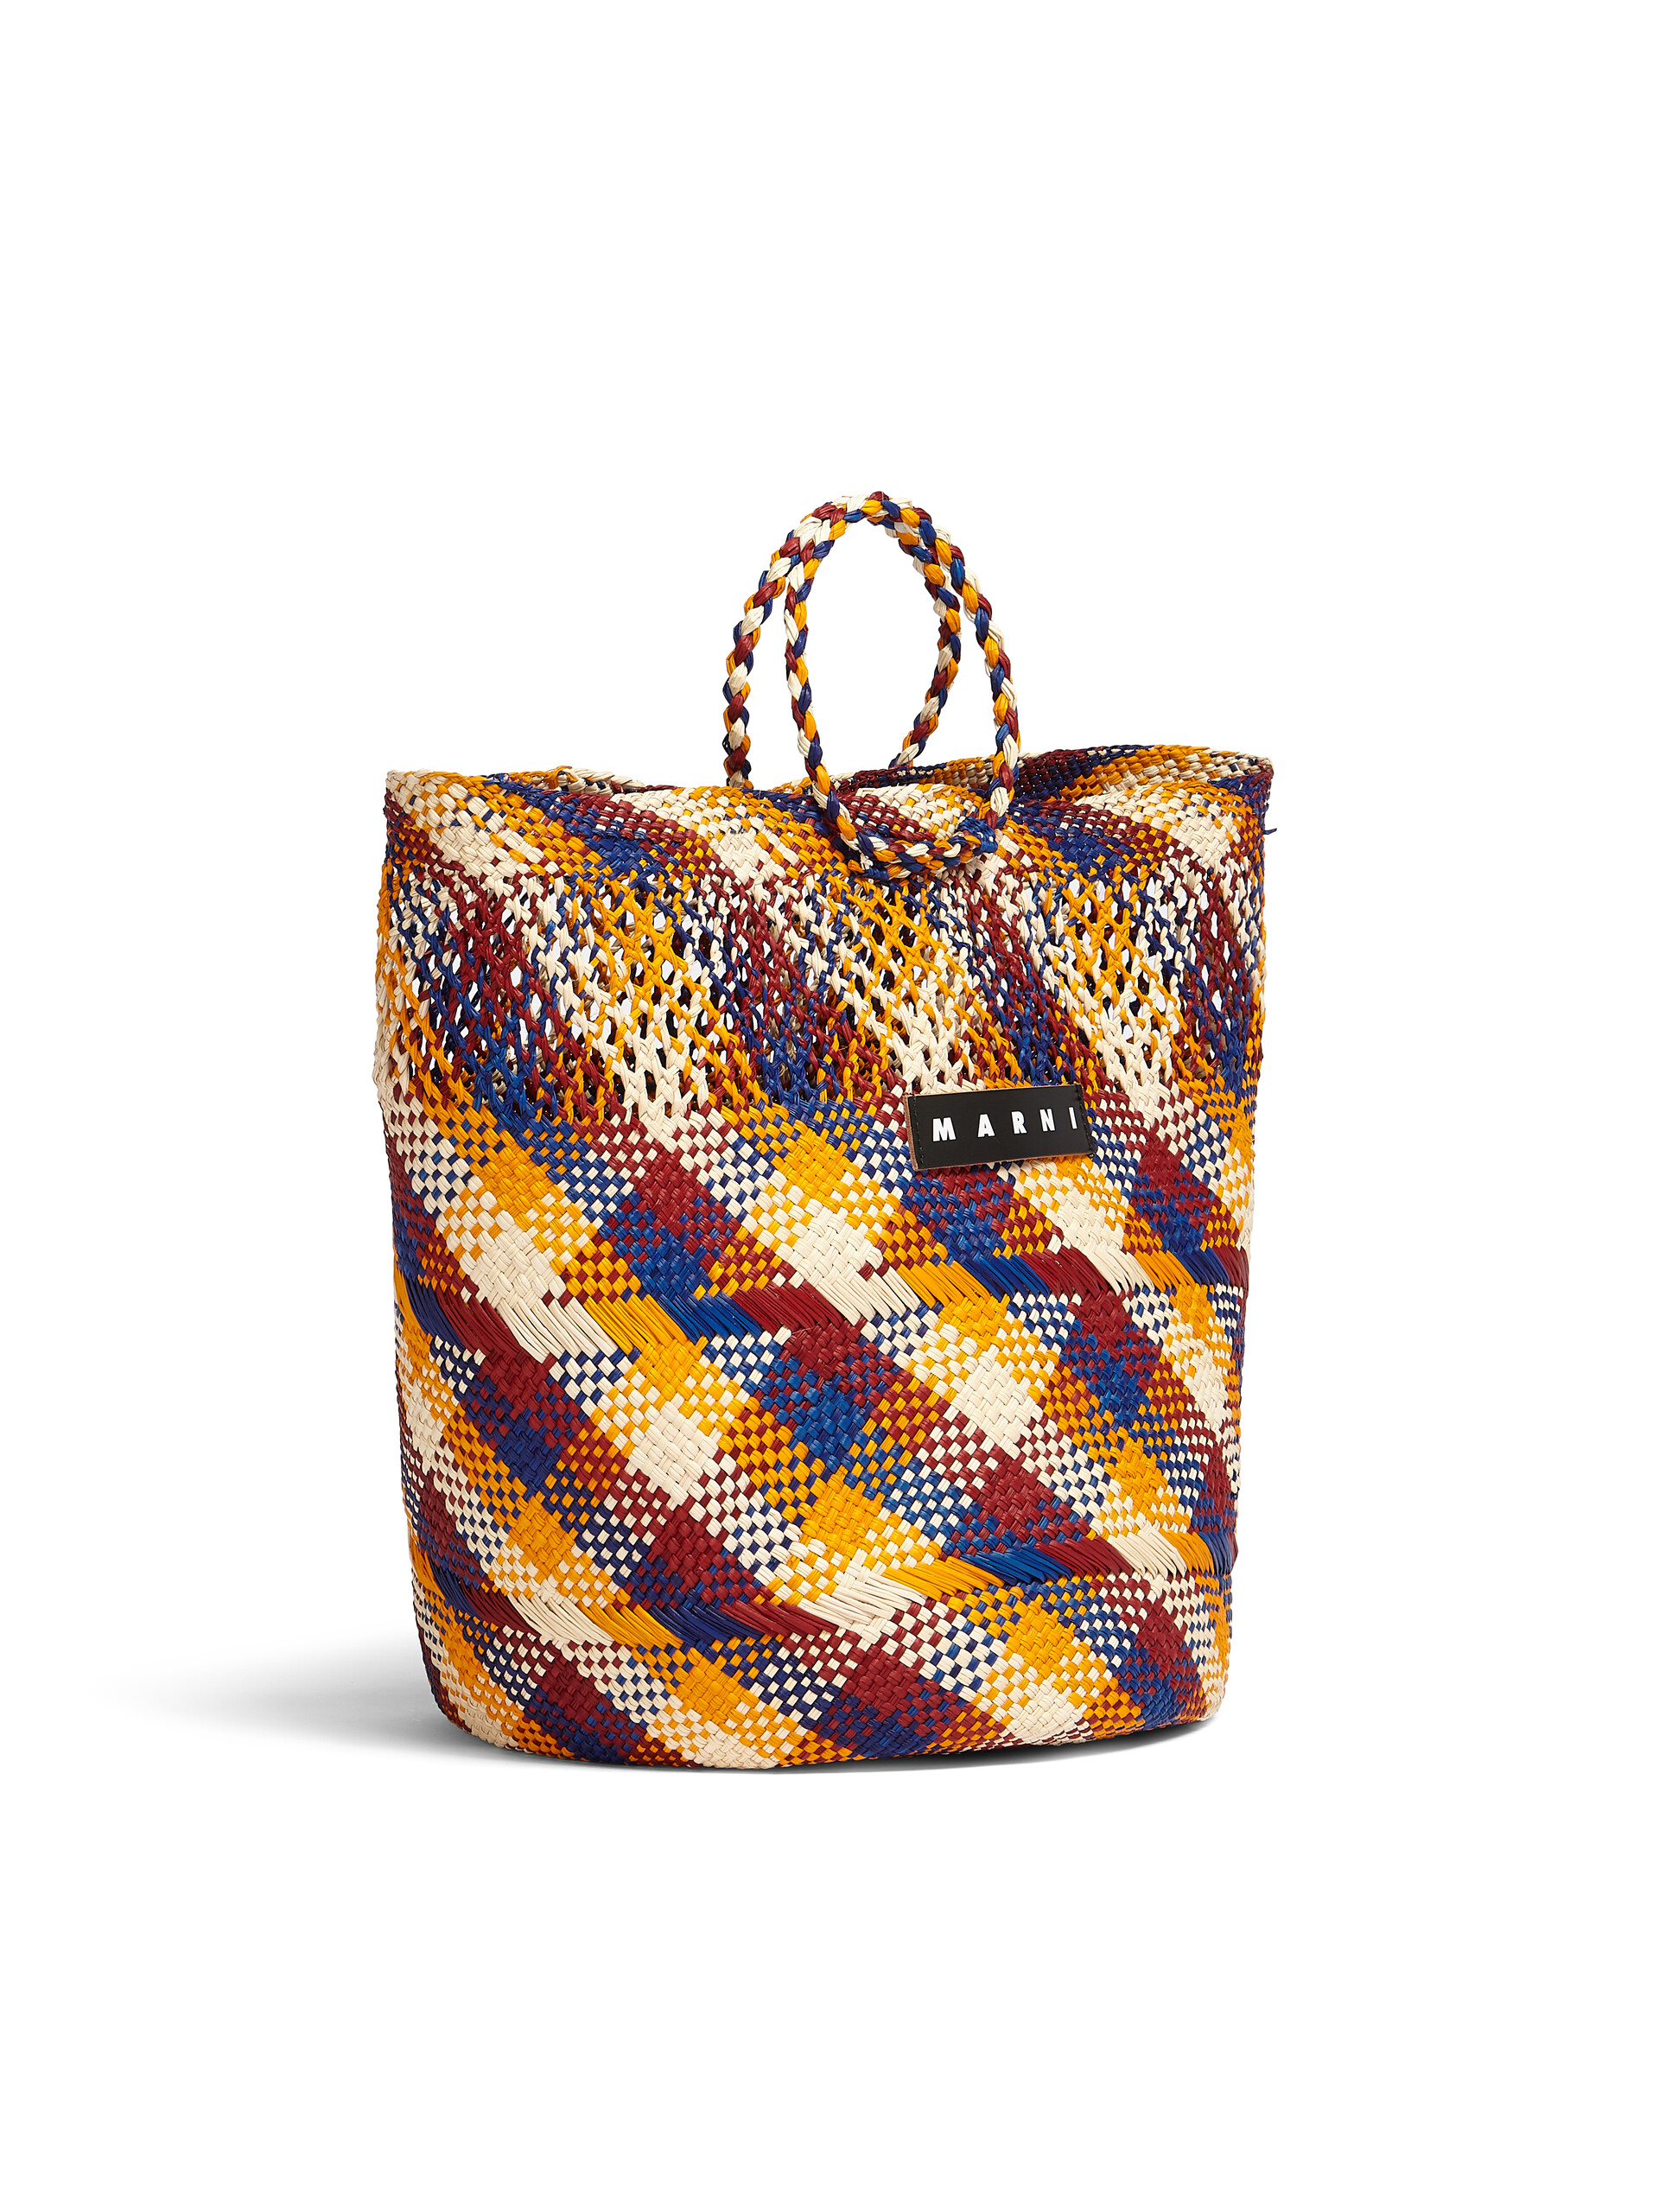 MARNI MARKET TAPIS bag in multicolor natural fiber - Shopping Bags - Image 2